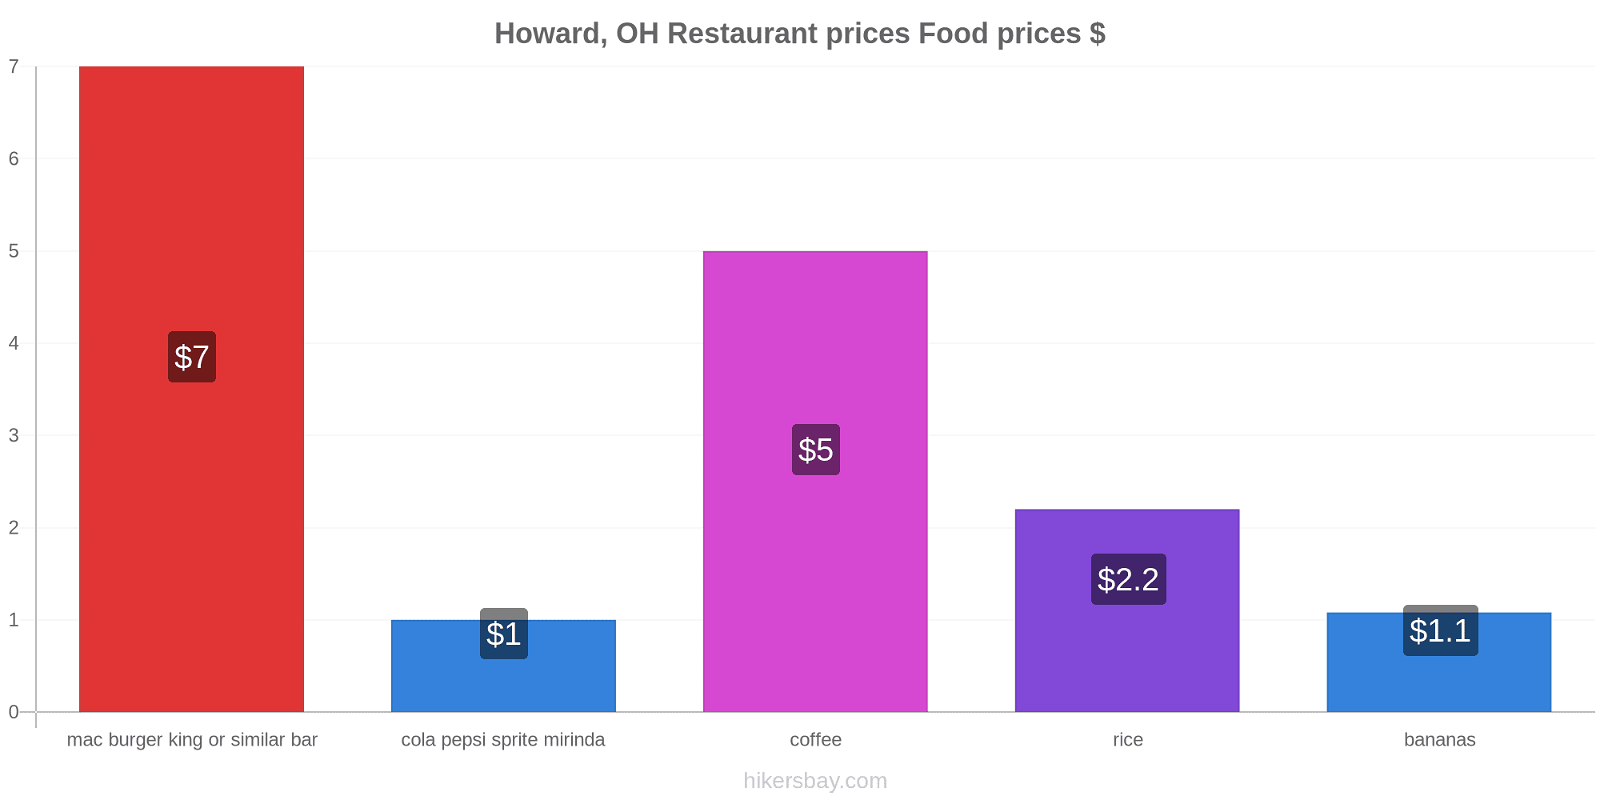 Howard, OH price changes hikersbay.com